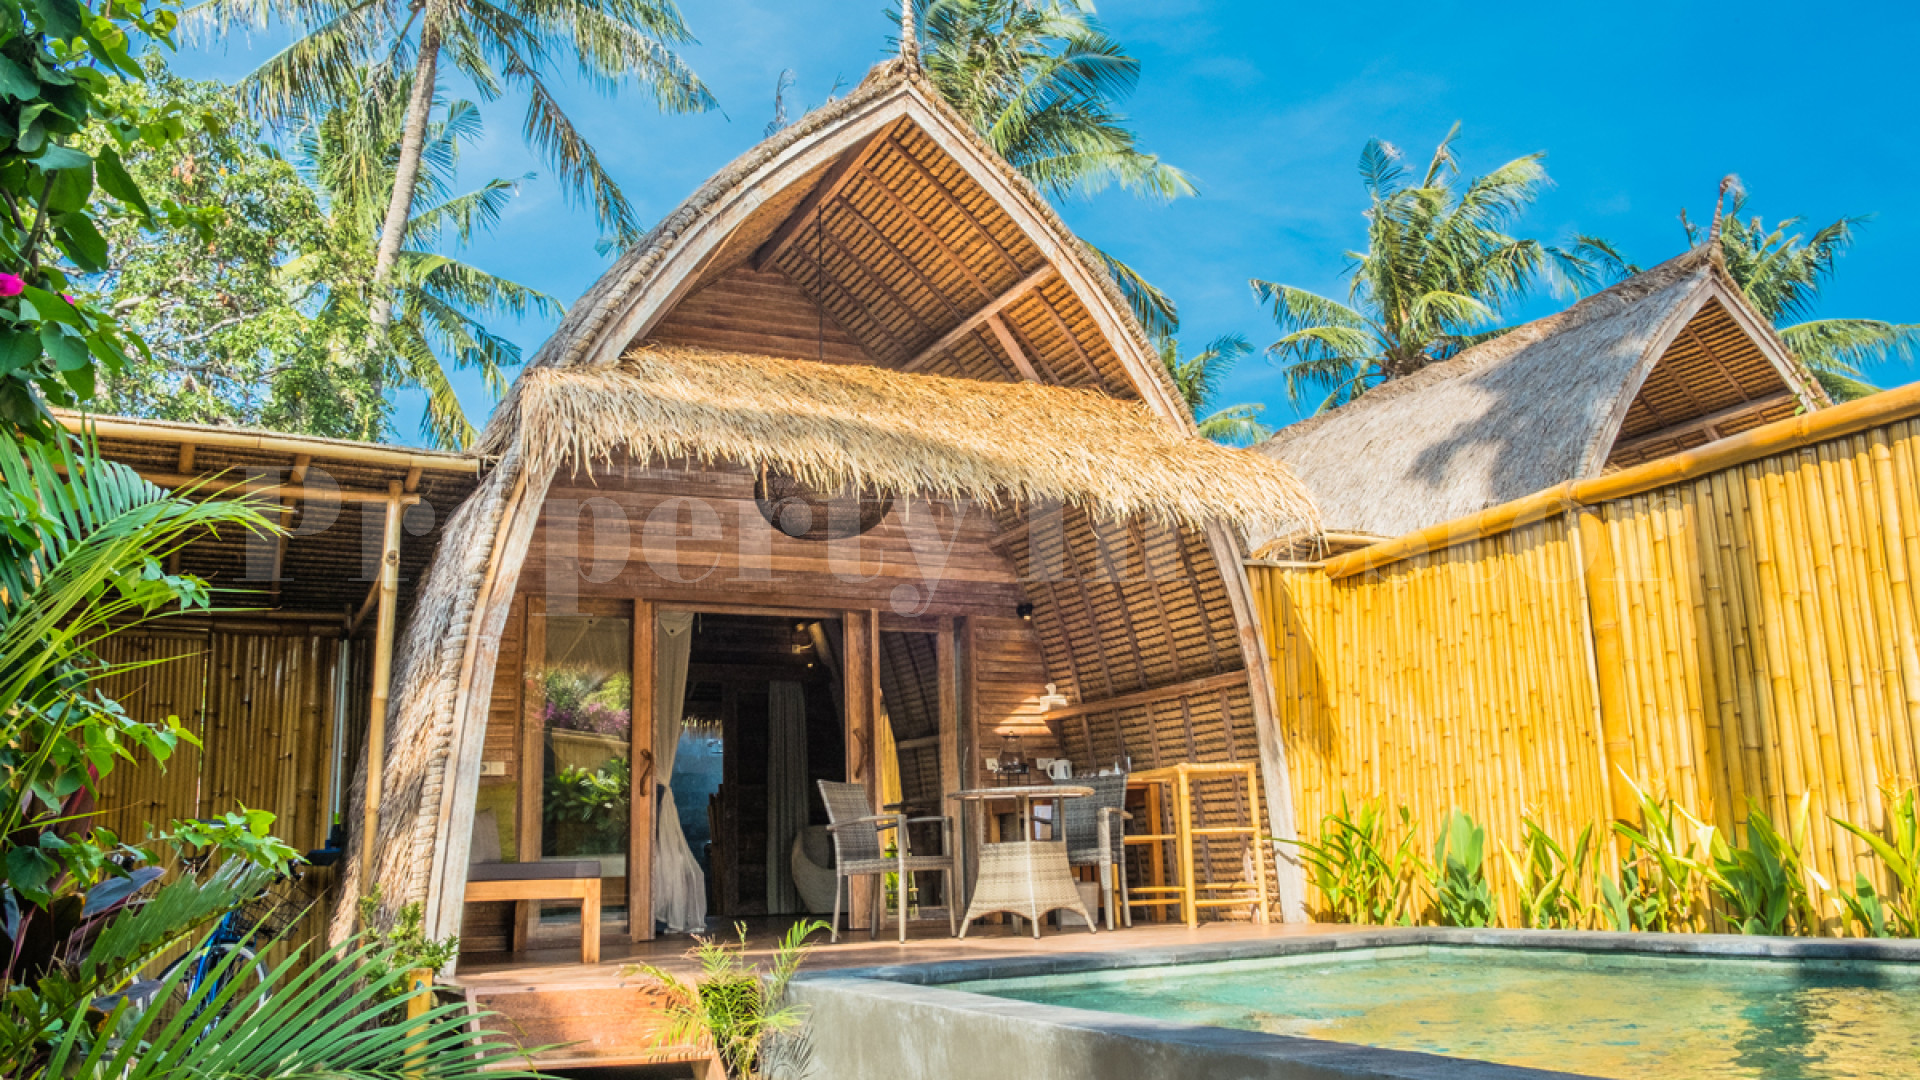 Unique Boutique Island Hotel with 4 Private Villas for Sale on Gili Air, Indonesia